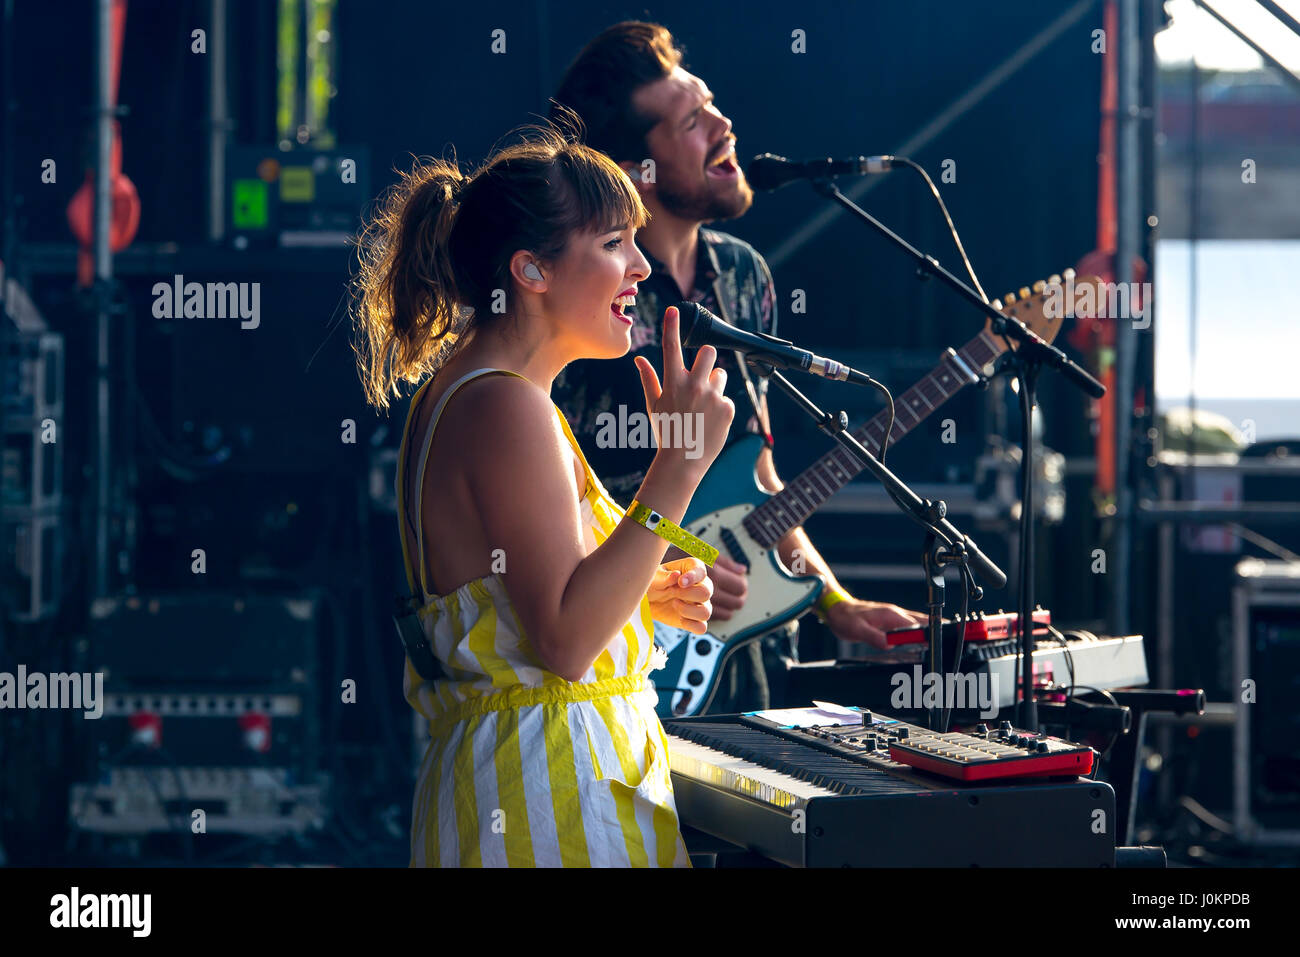 MADRID - SEP 10: Oh Wonder (alt-pop band) perform in concert at Dcode Music Festival on September 10, 2016 in Madrid, Spain. Stock Photo